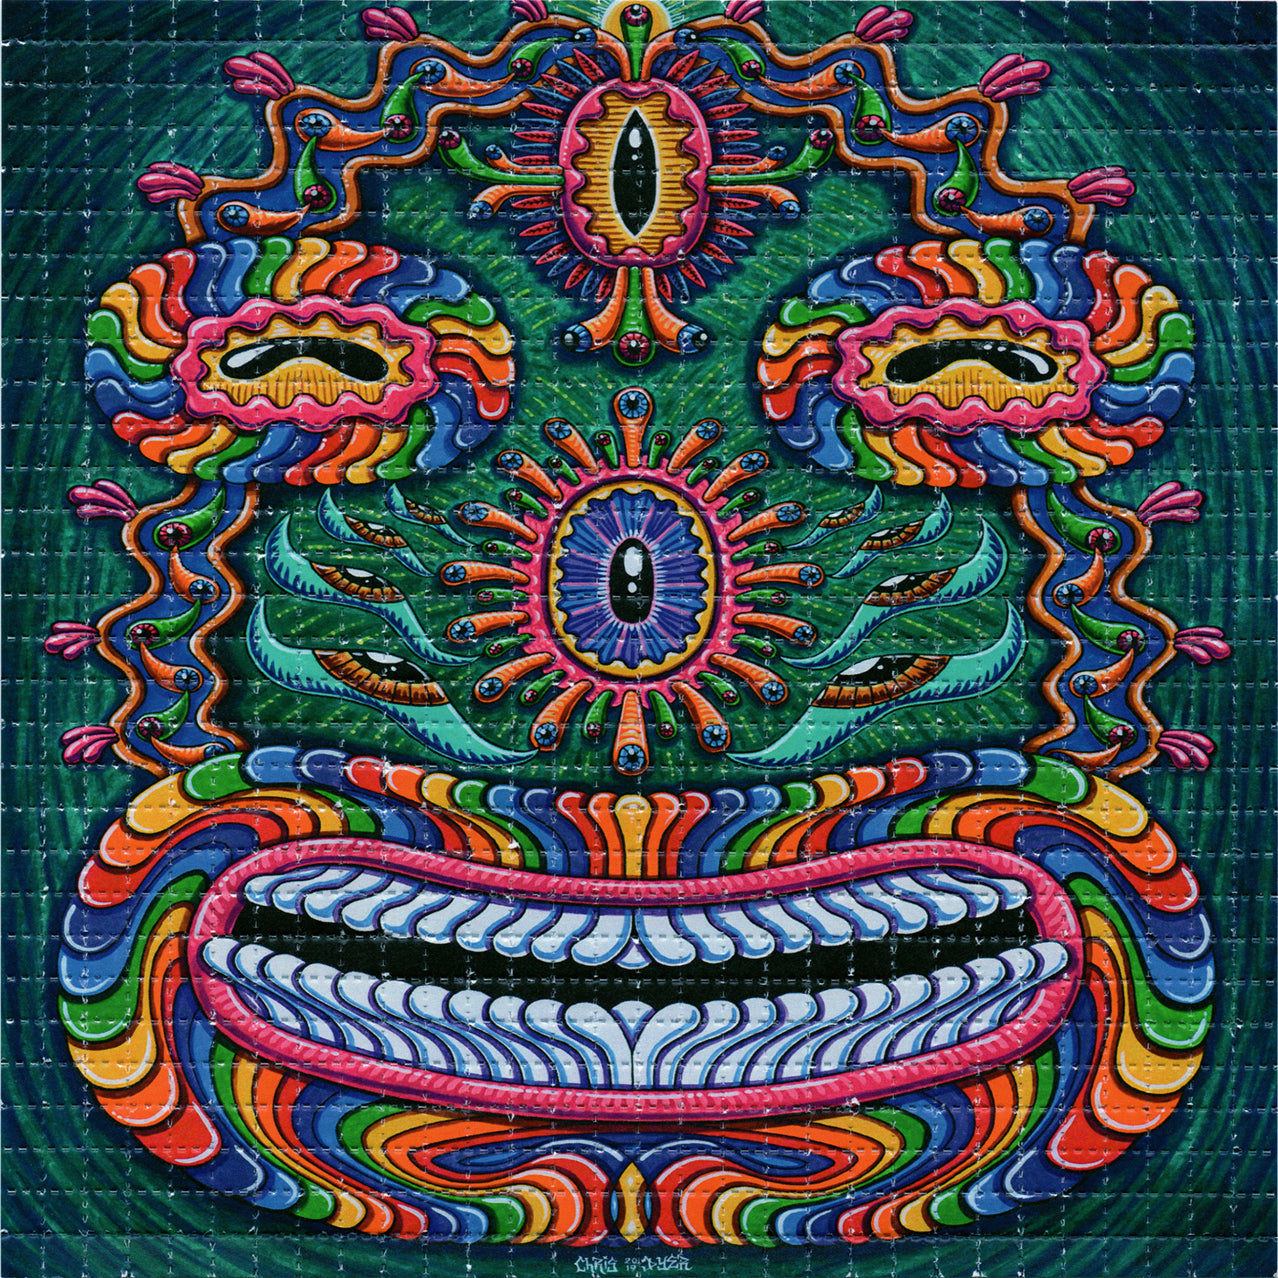 Bribribri by Chris Dyer LSD blotter art print